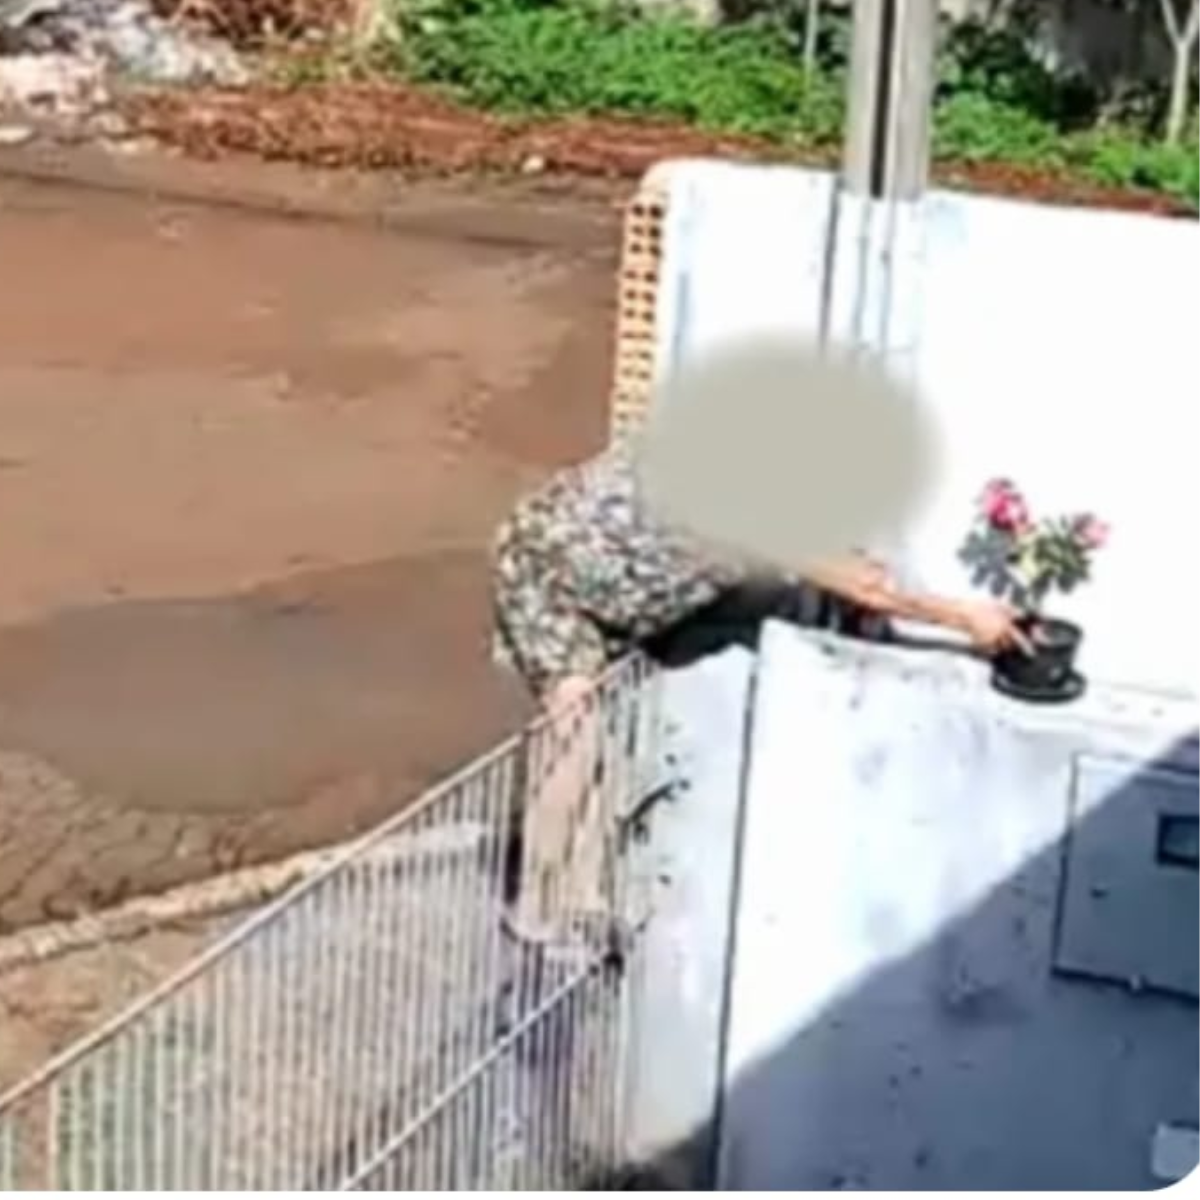  mulher furta planta em muro 